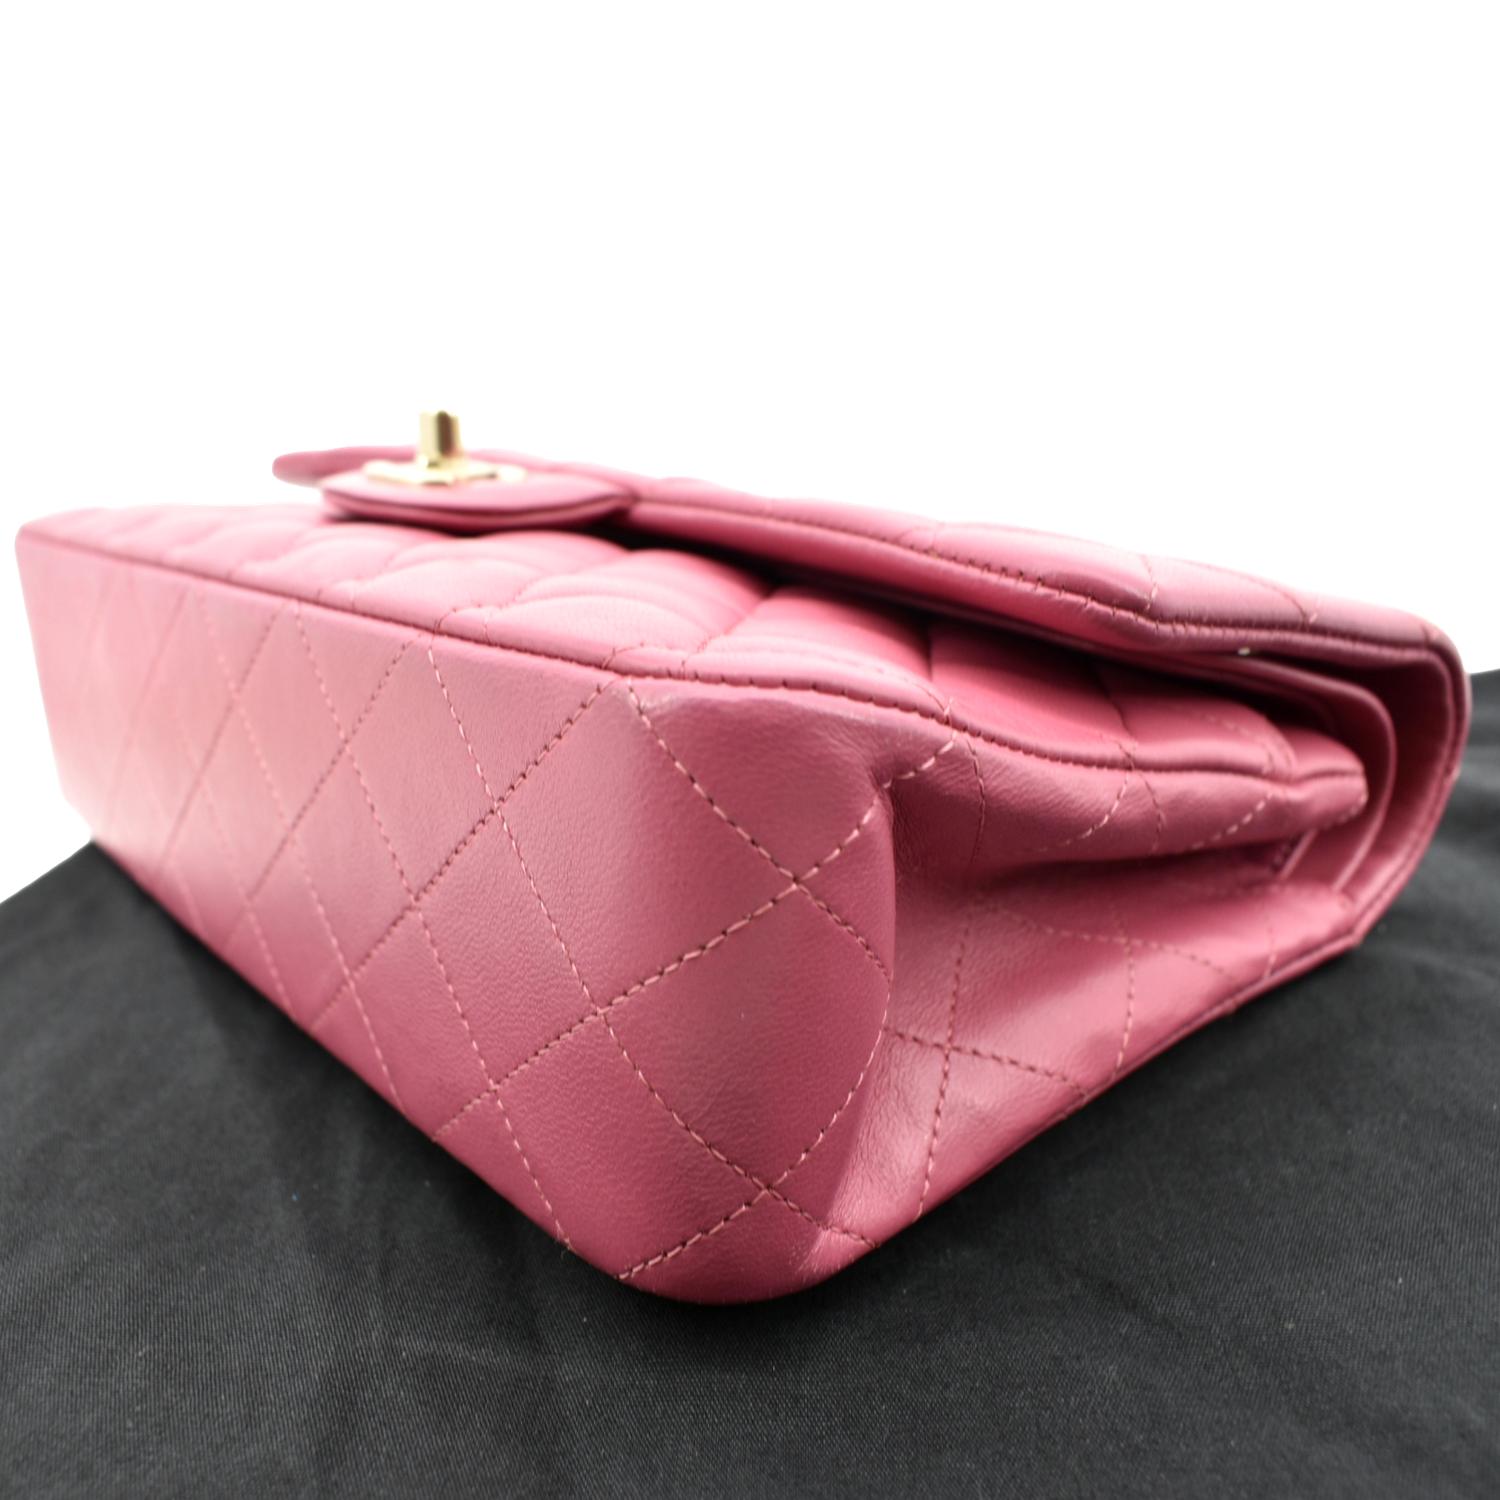 Chanel Classic Medium Double Flap Leather Shoulder Bag